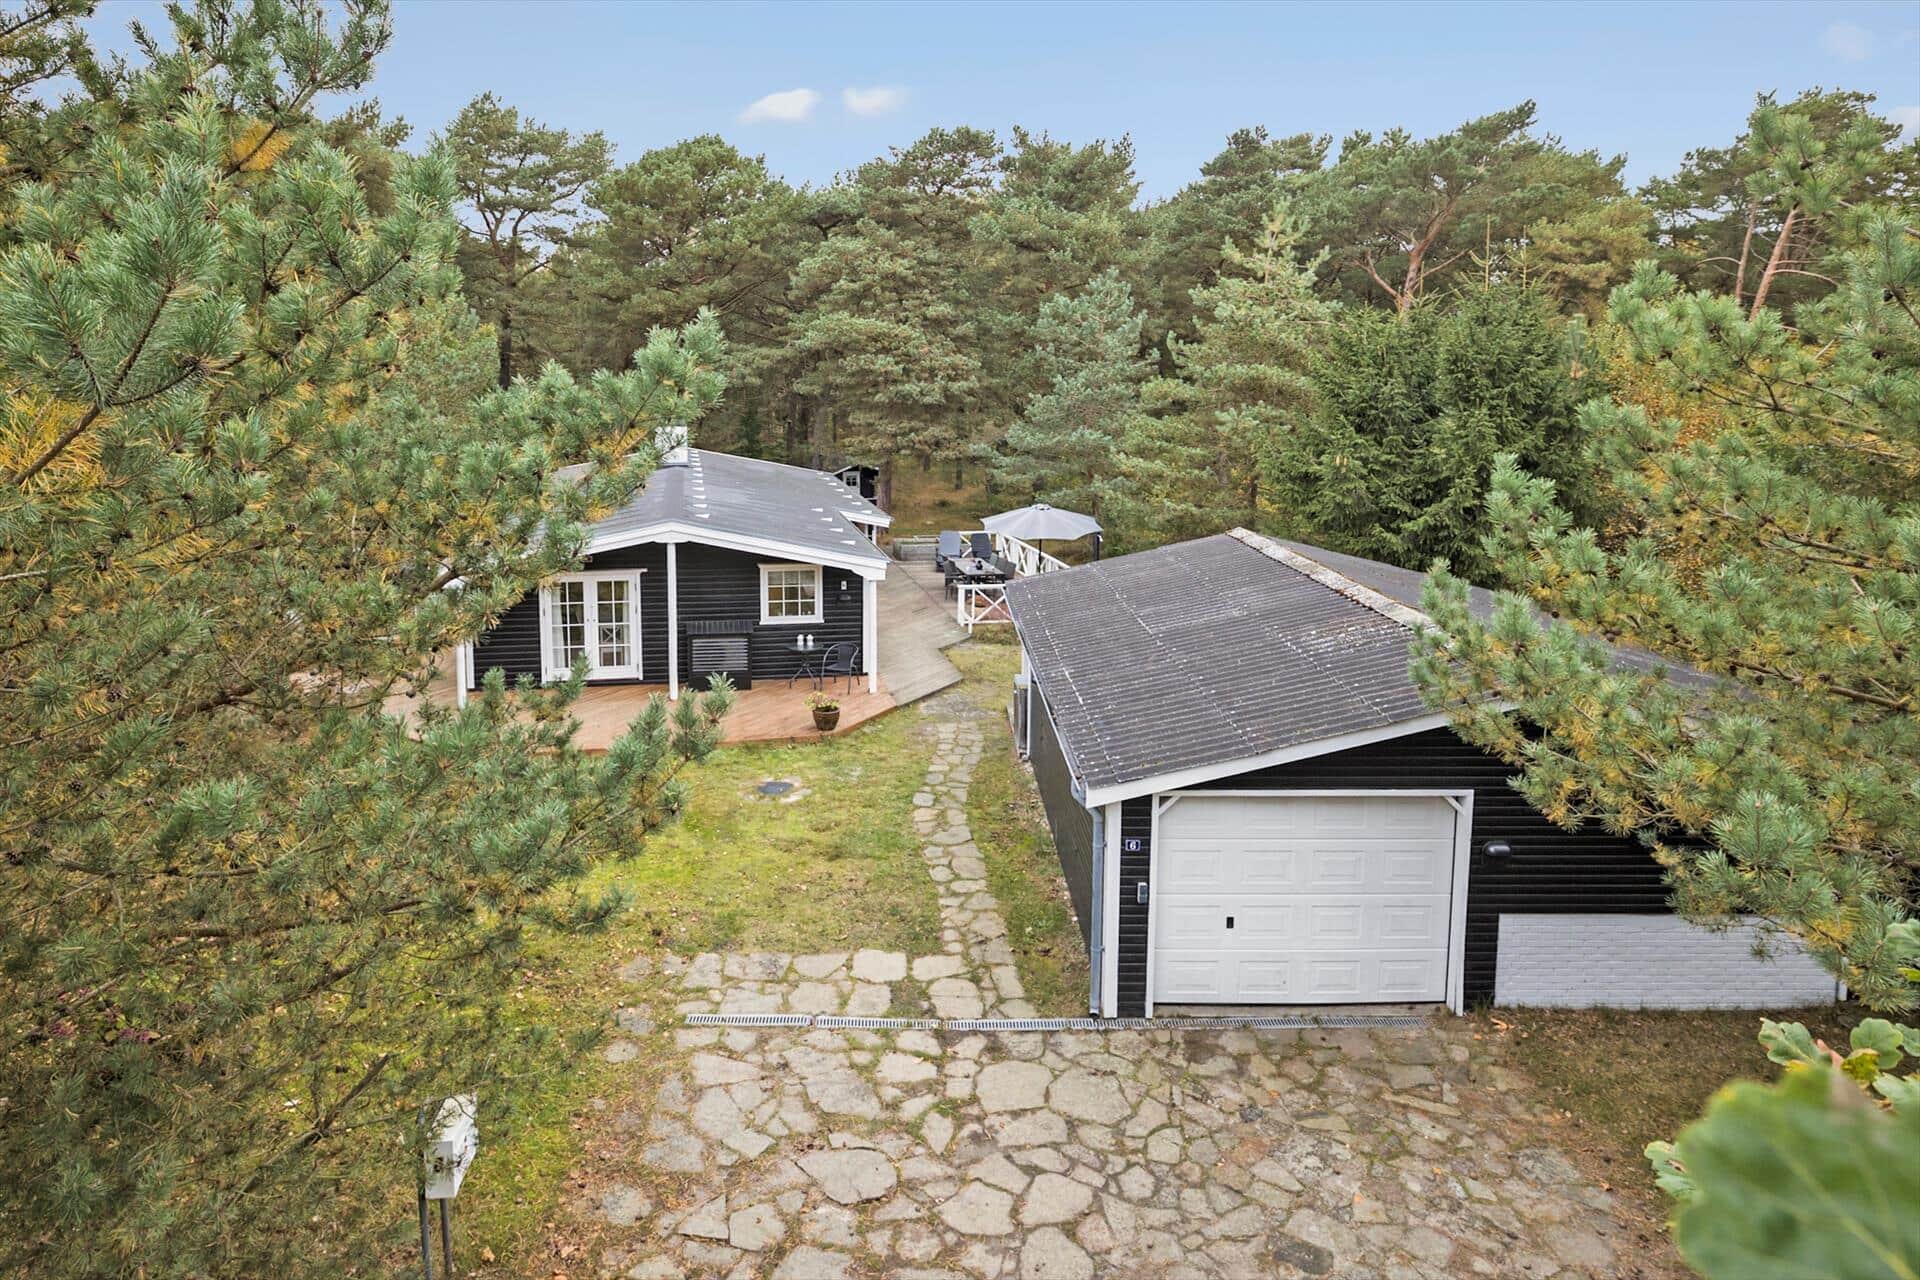 Image 0-10 Holiday-home 3501, Granvej 6, DK - 3730 Nexø